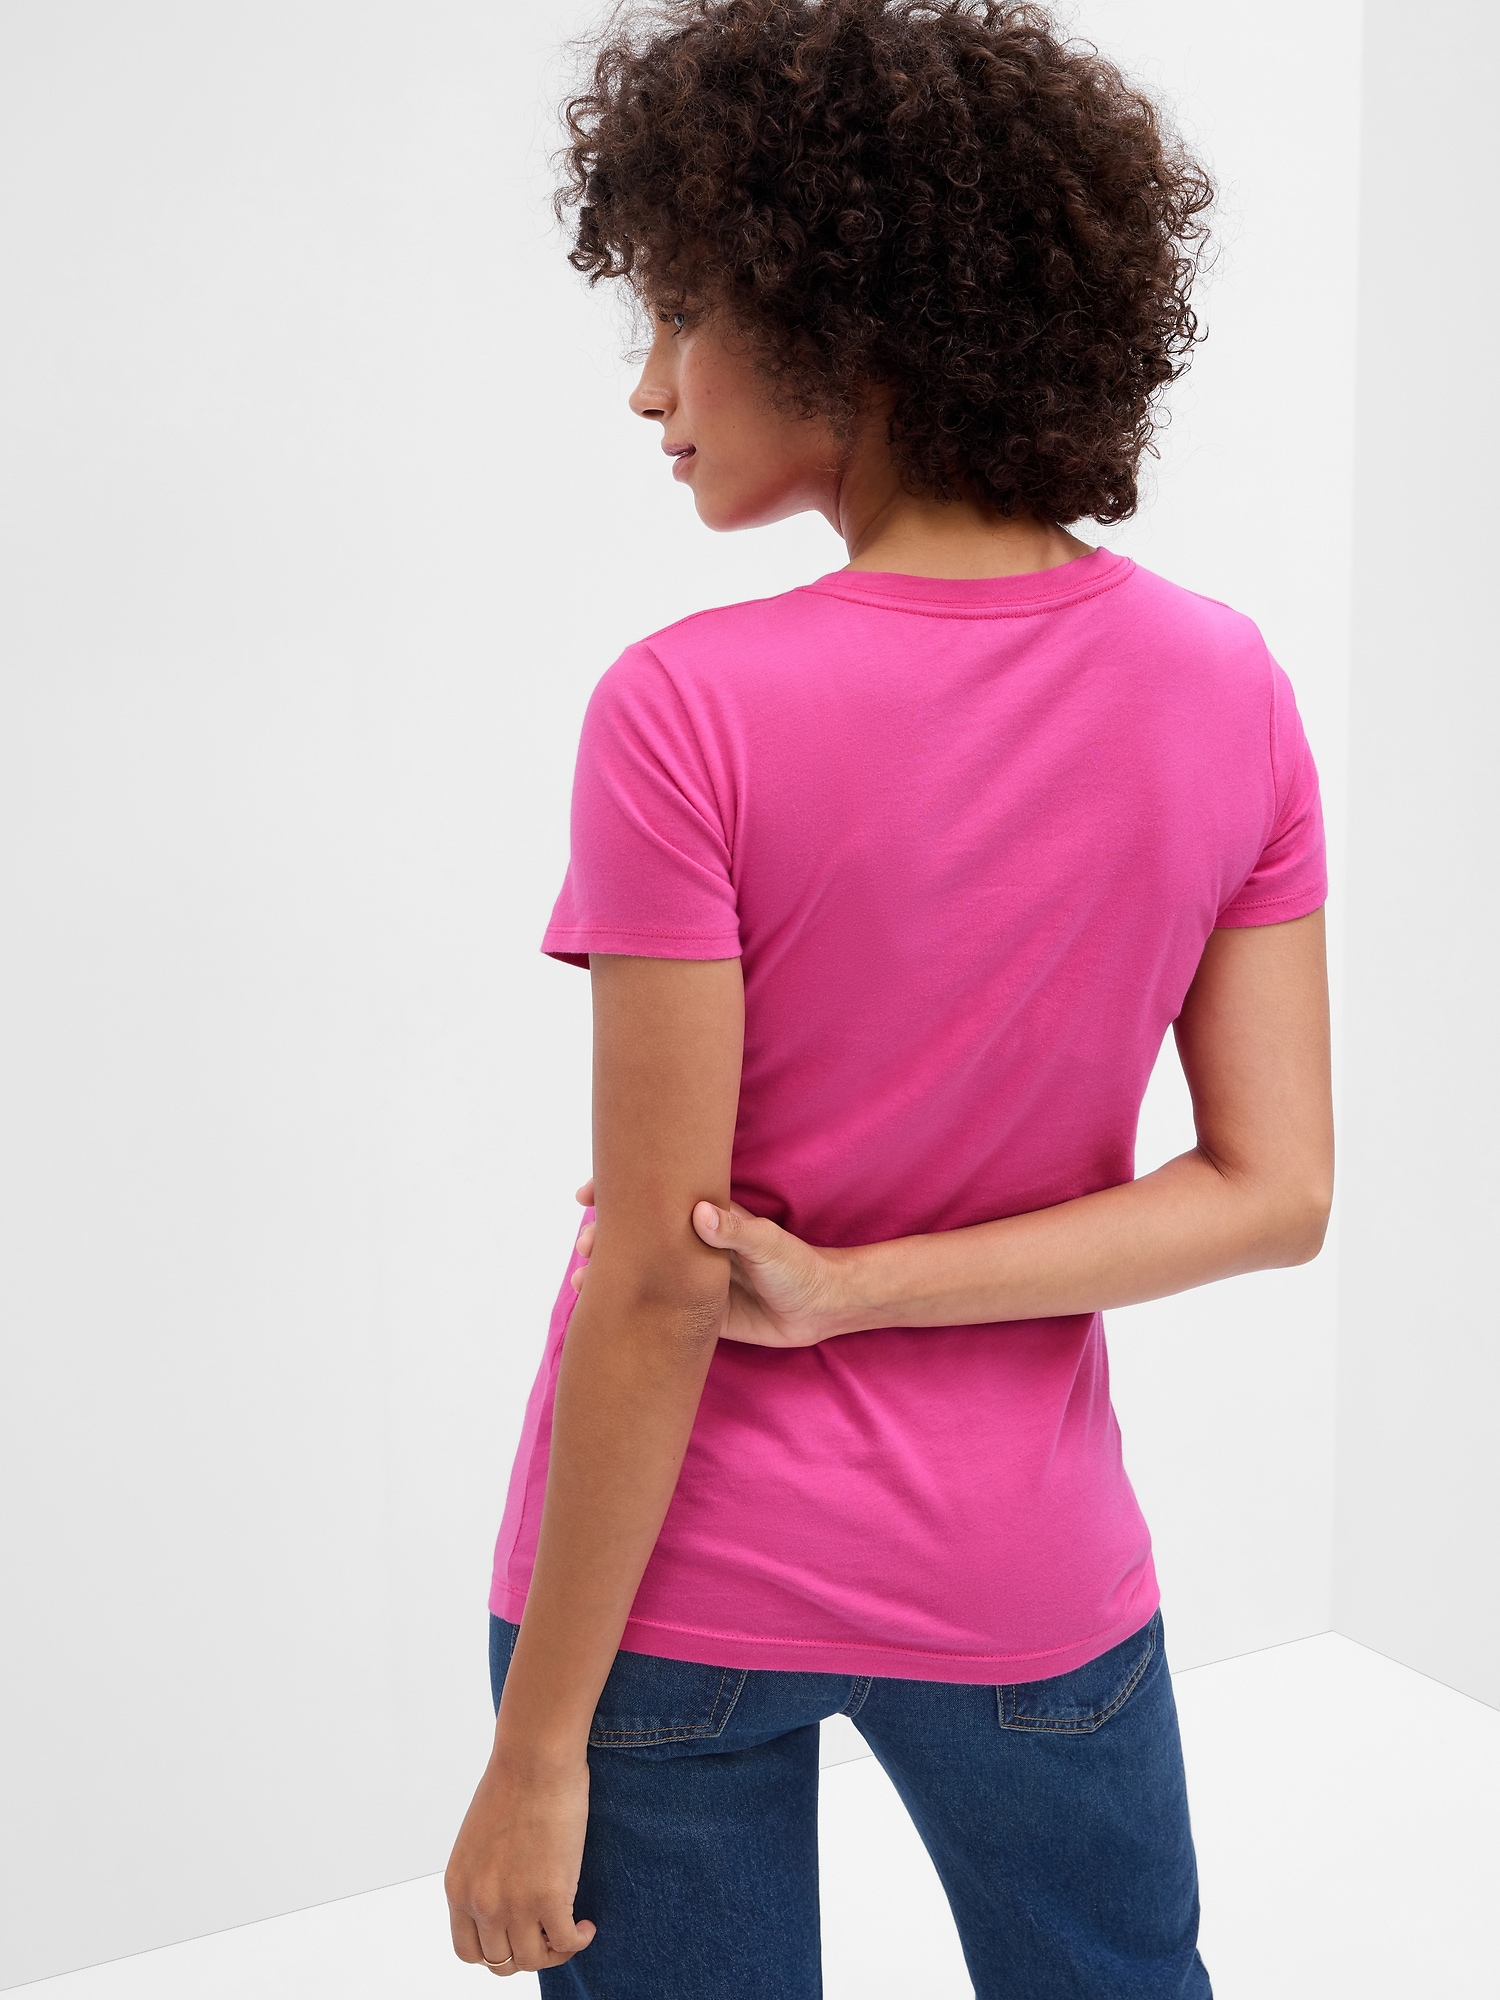 Gap Factory Women's Gap Logo T-Shirt Standout Pink Size L